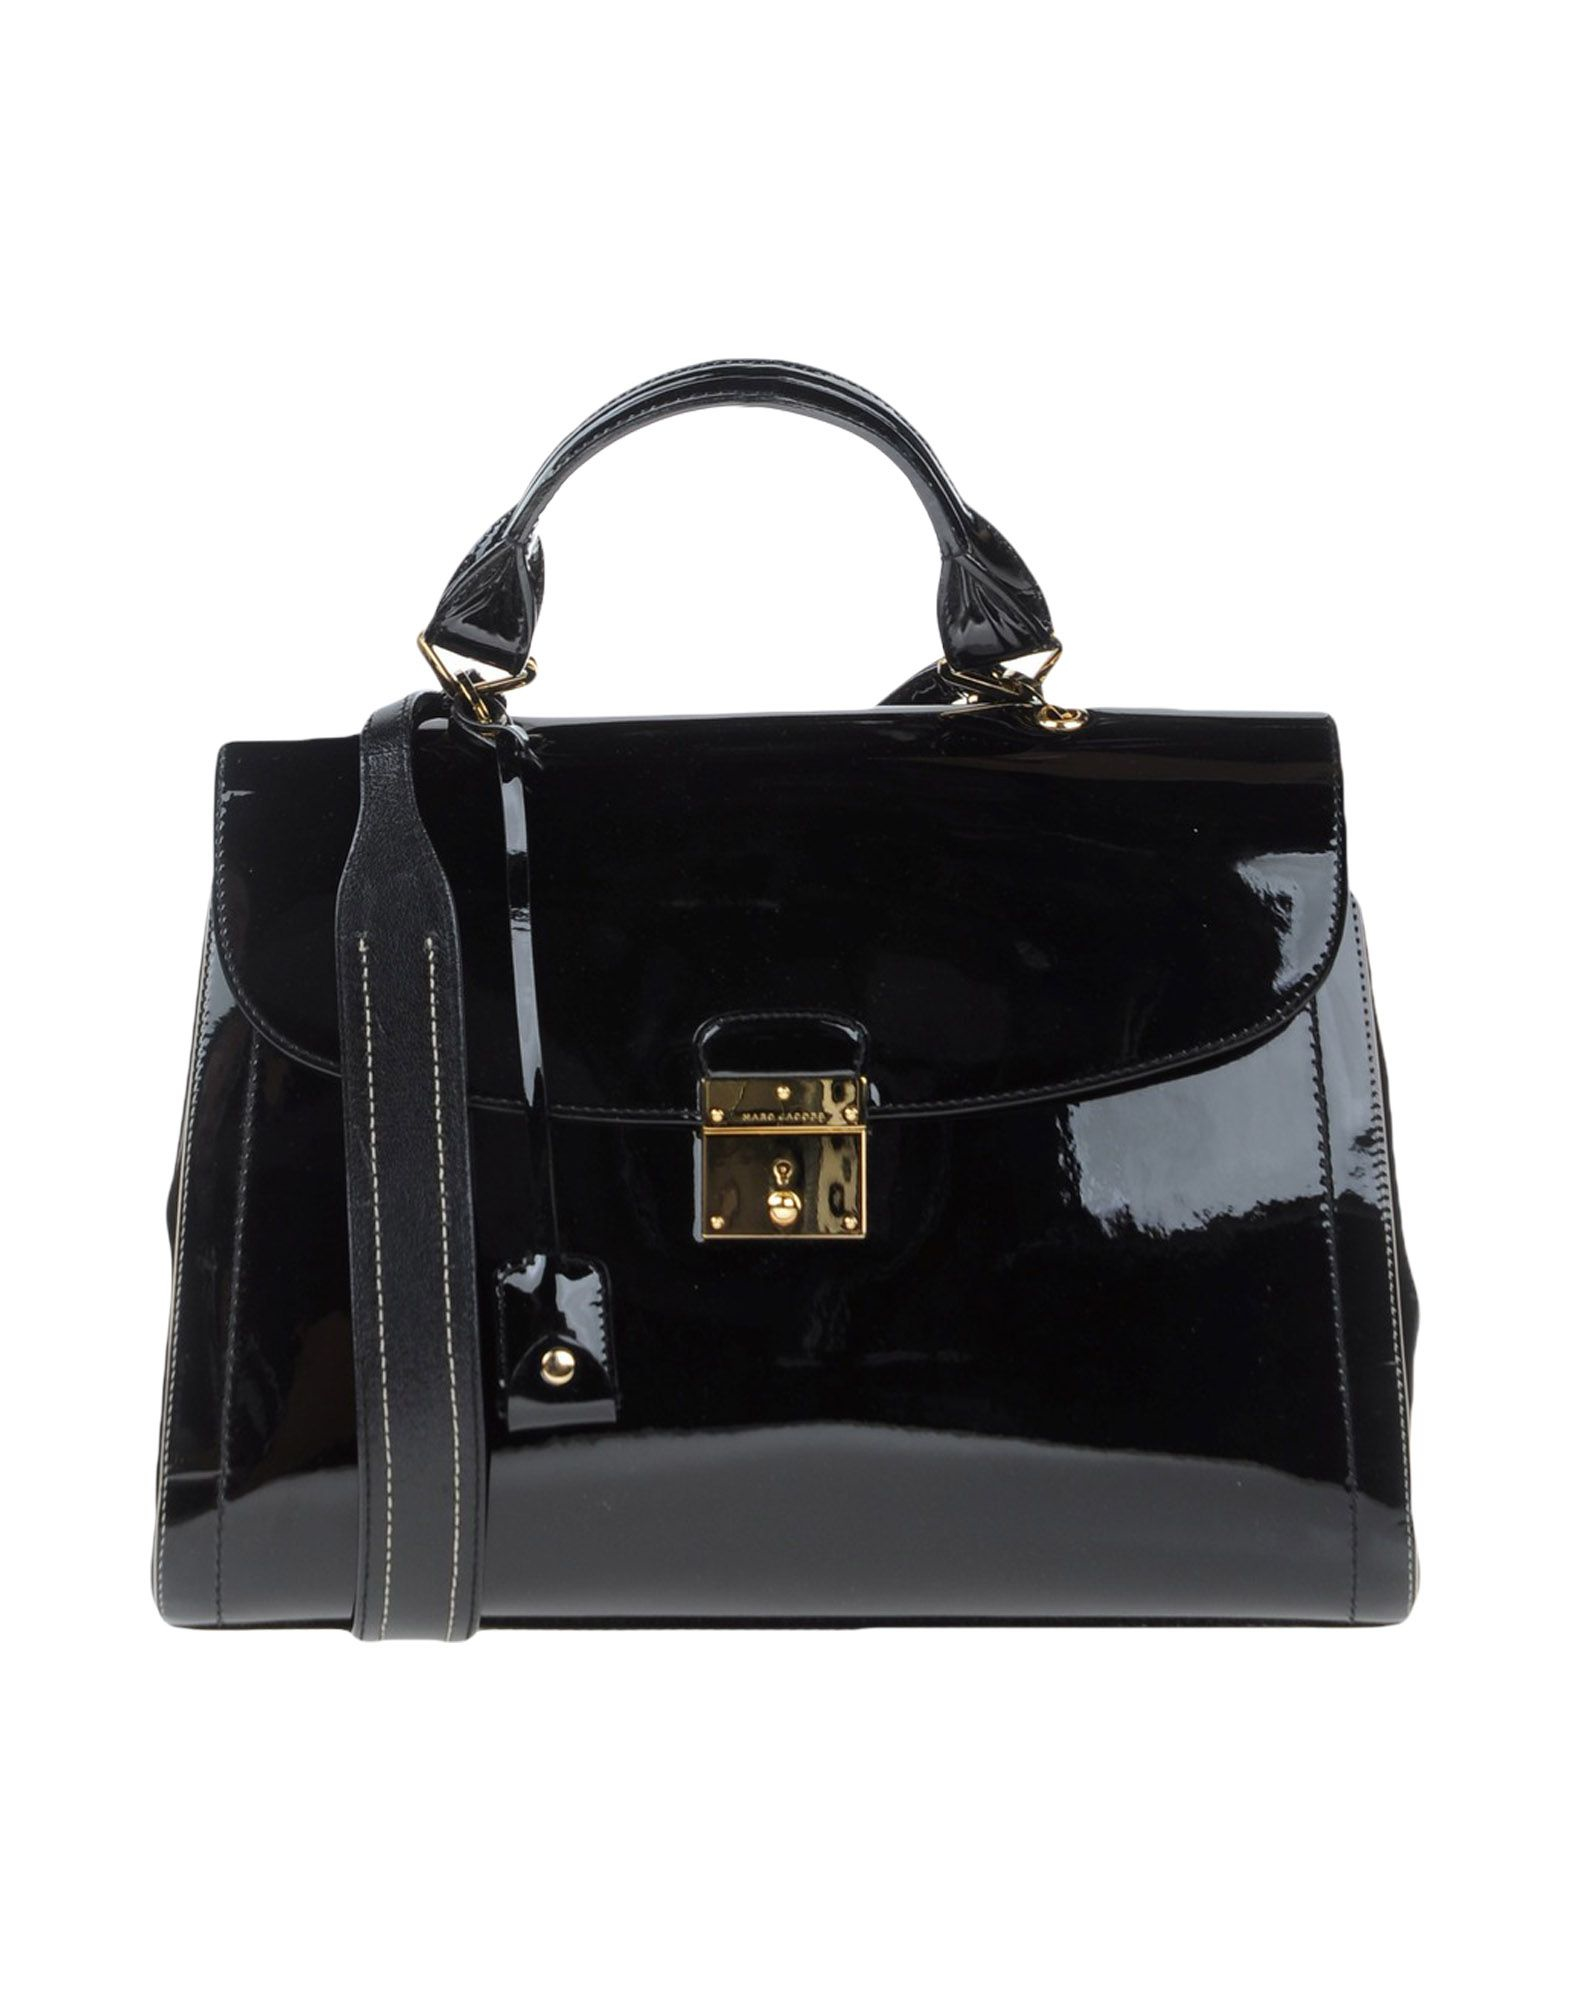 Marc Jacobs Handbag in Black - Lyst